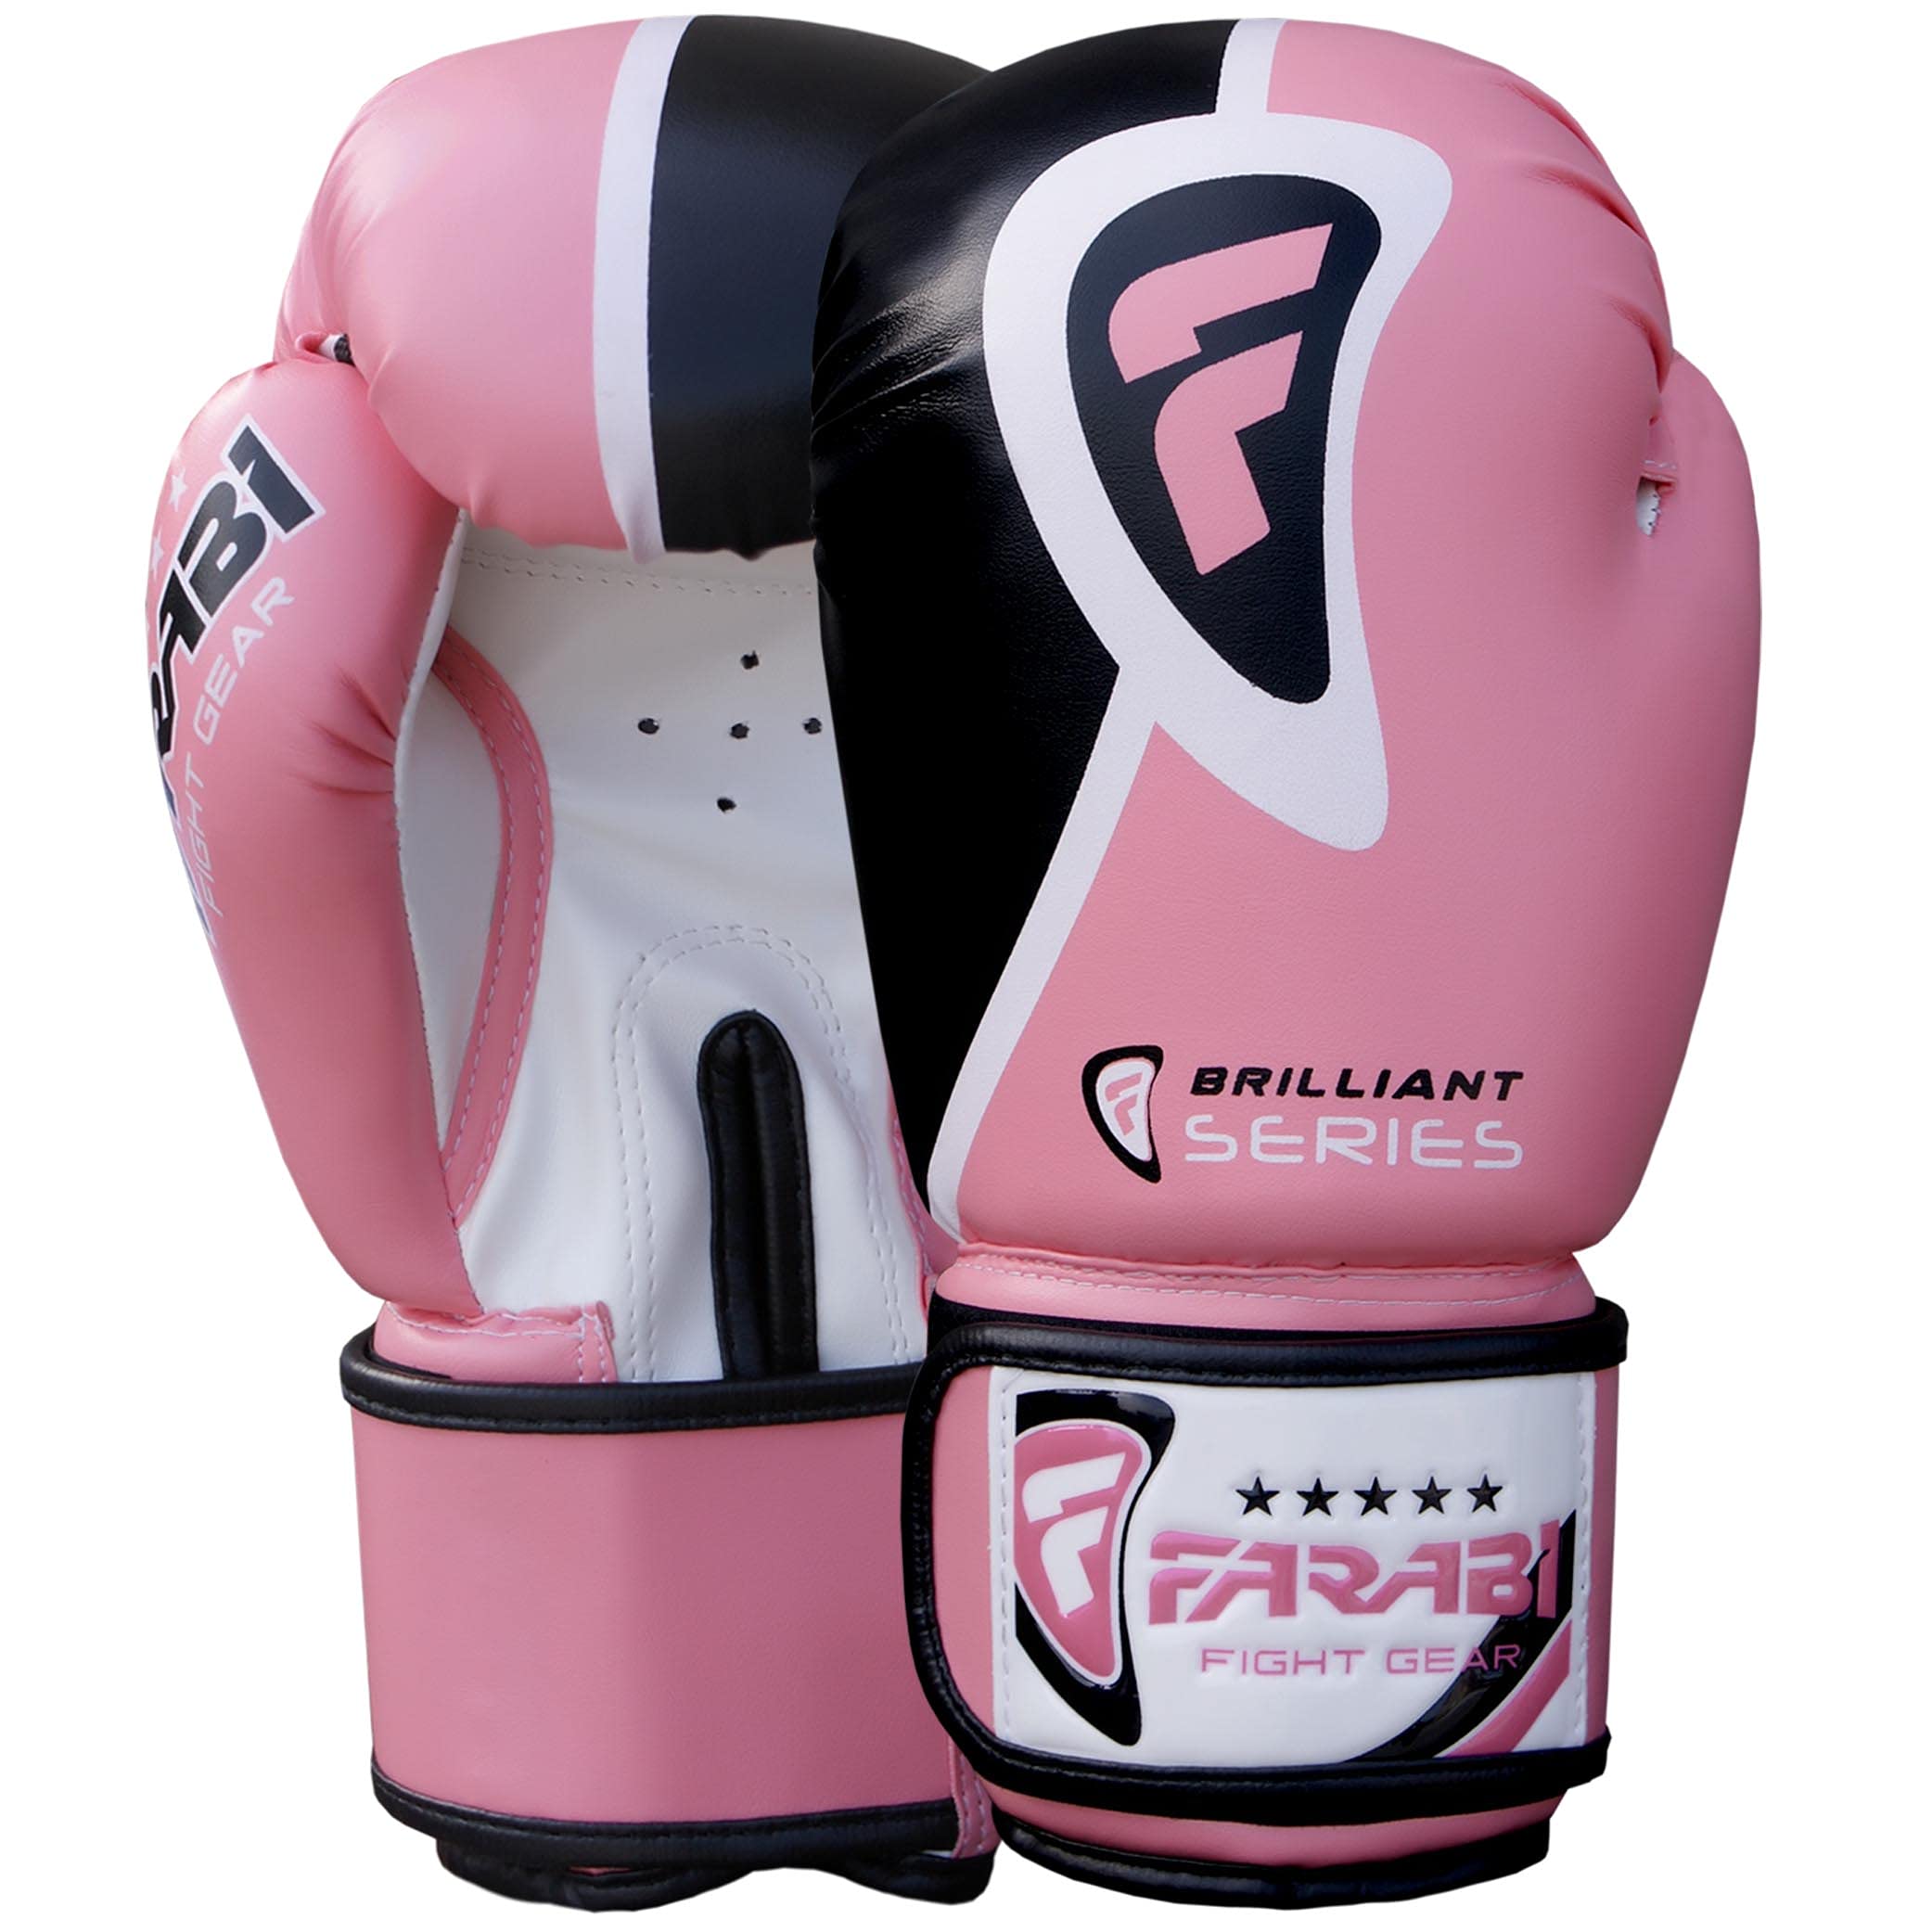 Farabi Sports Boxhandschuhe 10 oz, 12 oz, 14 oz, 16 oz Box Handschuhe für Training, Sparring, Kickboxen, MMA, Muay Thai, Boxhandschuhe männer & Damen Kampf Handschuhe (Pink Brilliant, 8-oz)